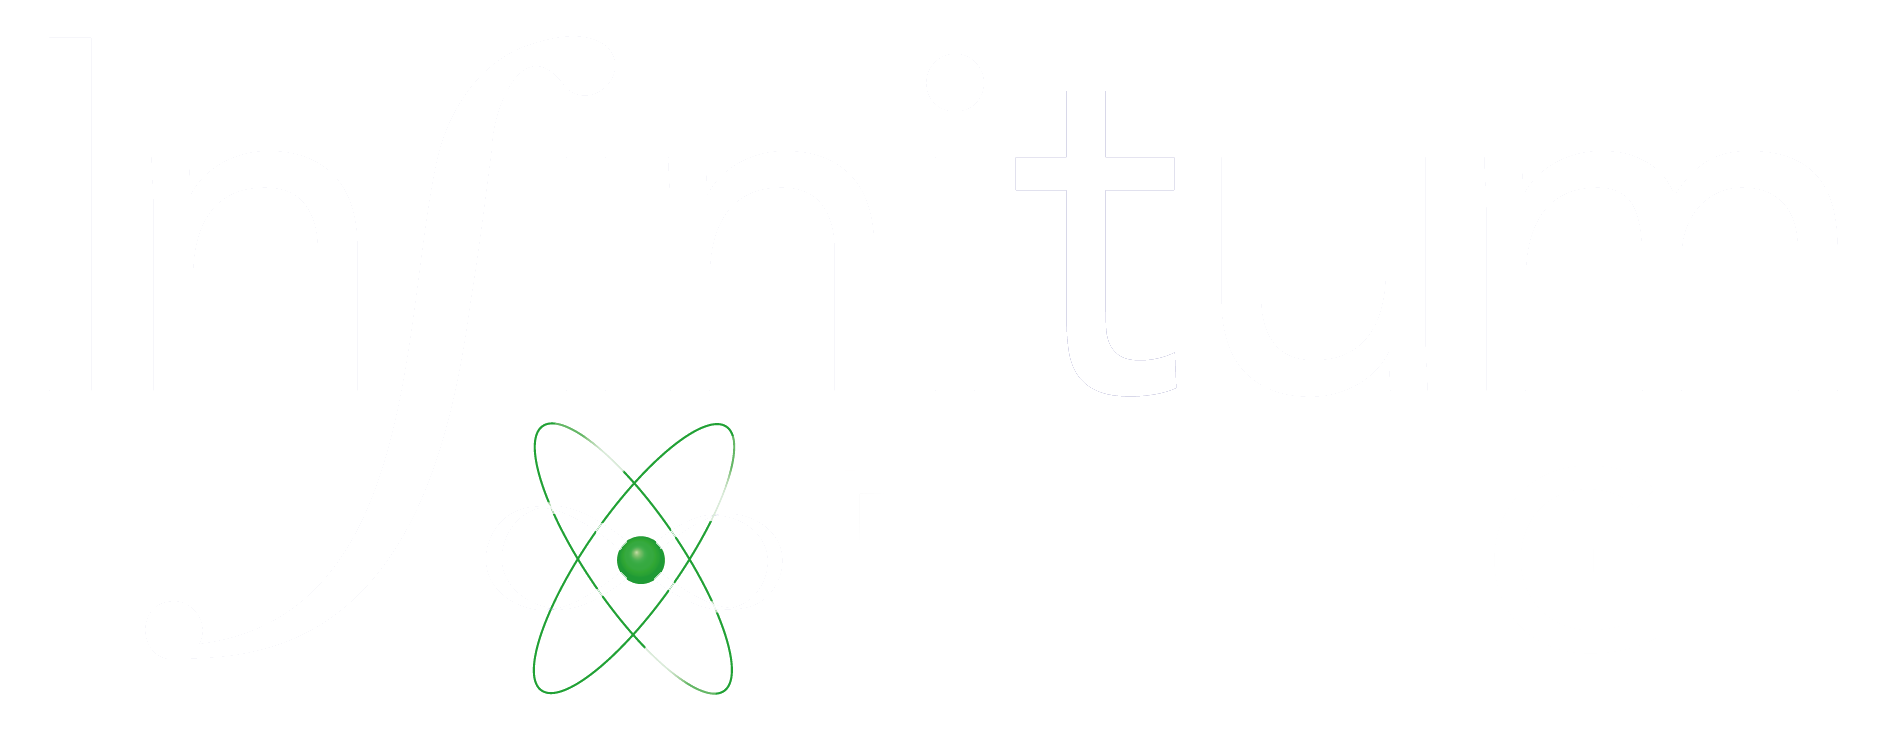 Infinitum Energy Group